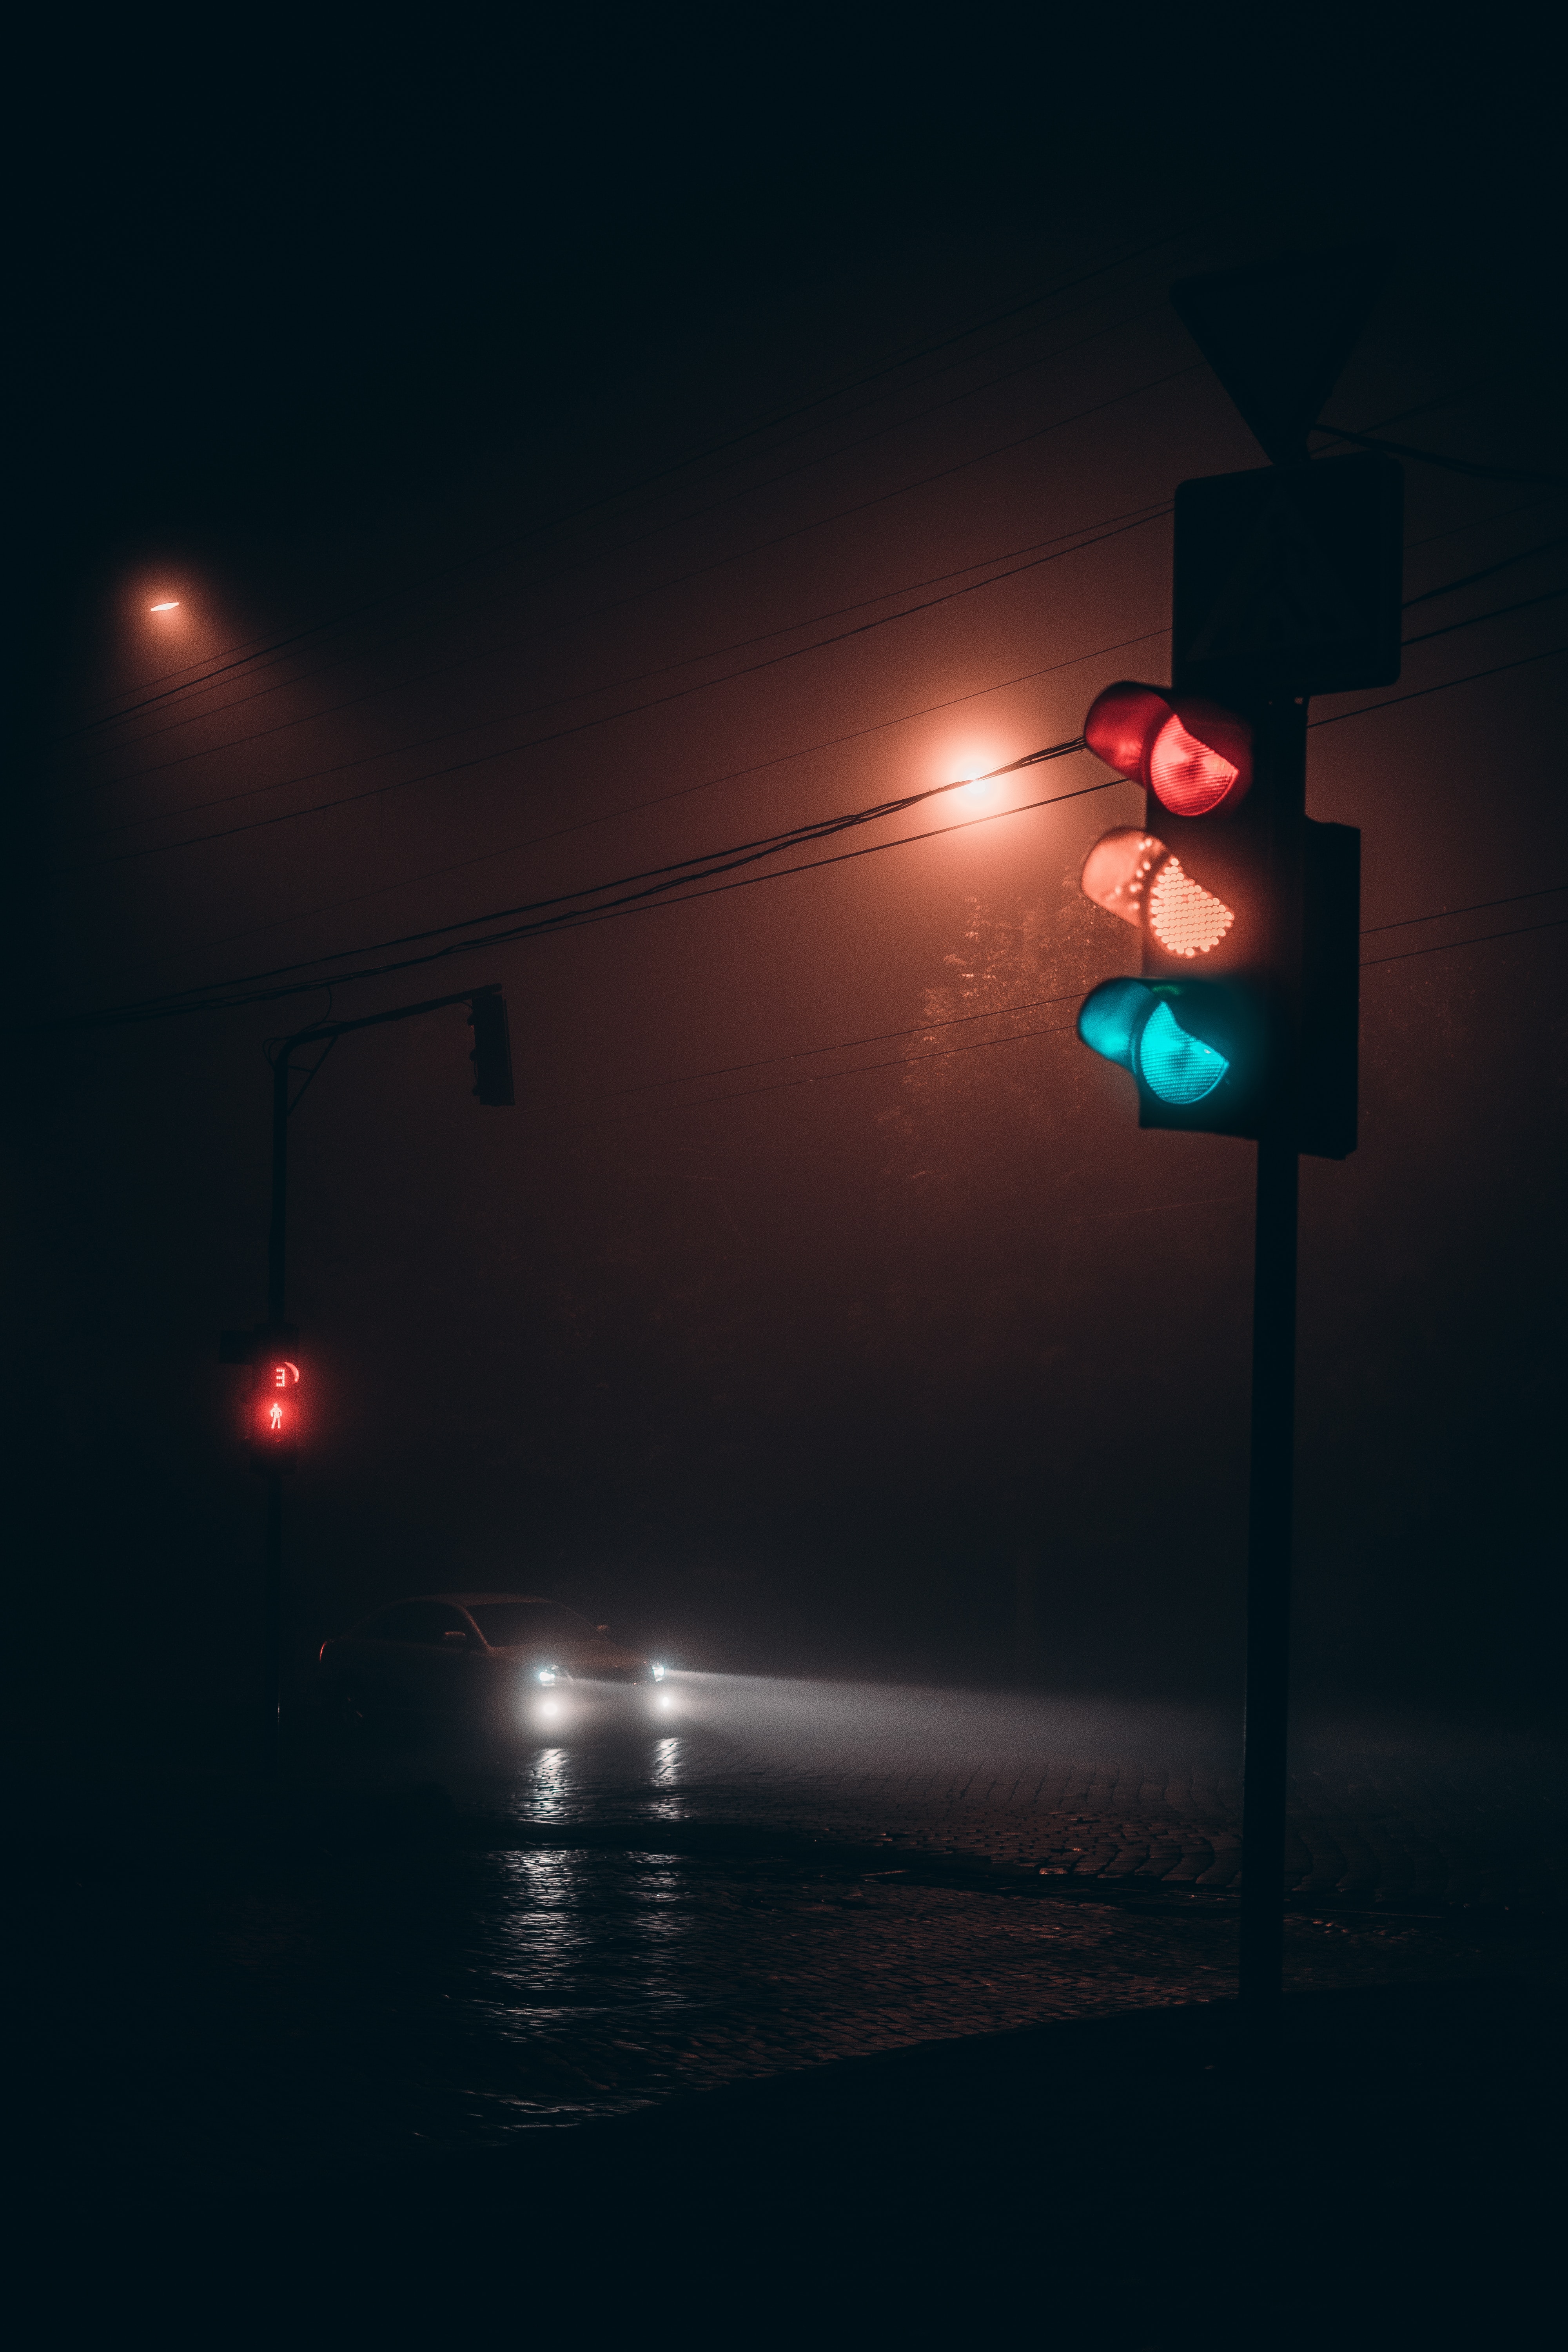 1920x1080 Background dark, machine, cities, night, road, fog, car, traffic light